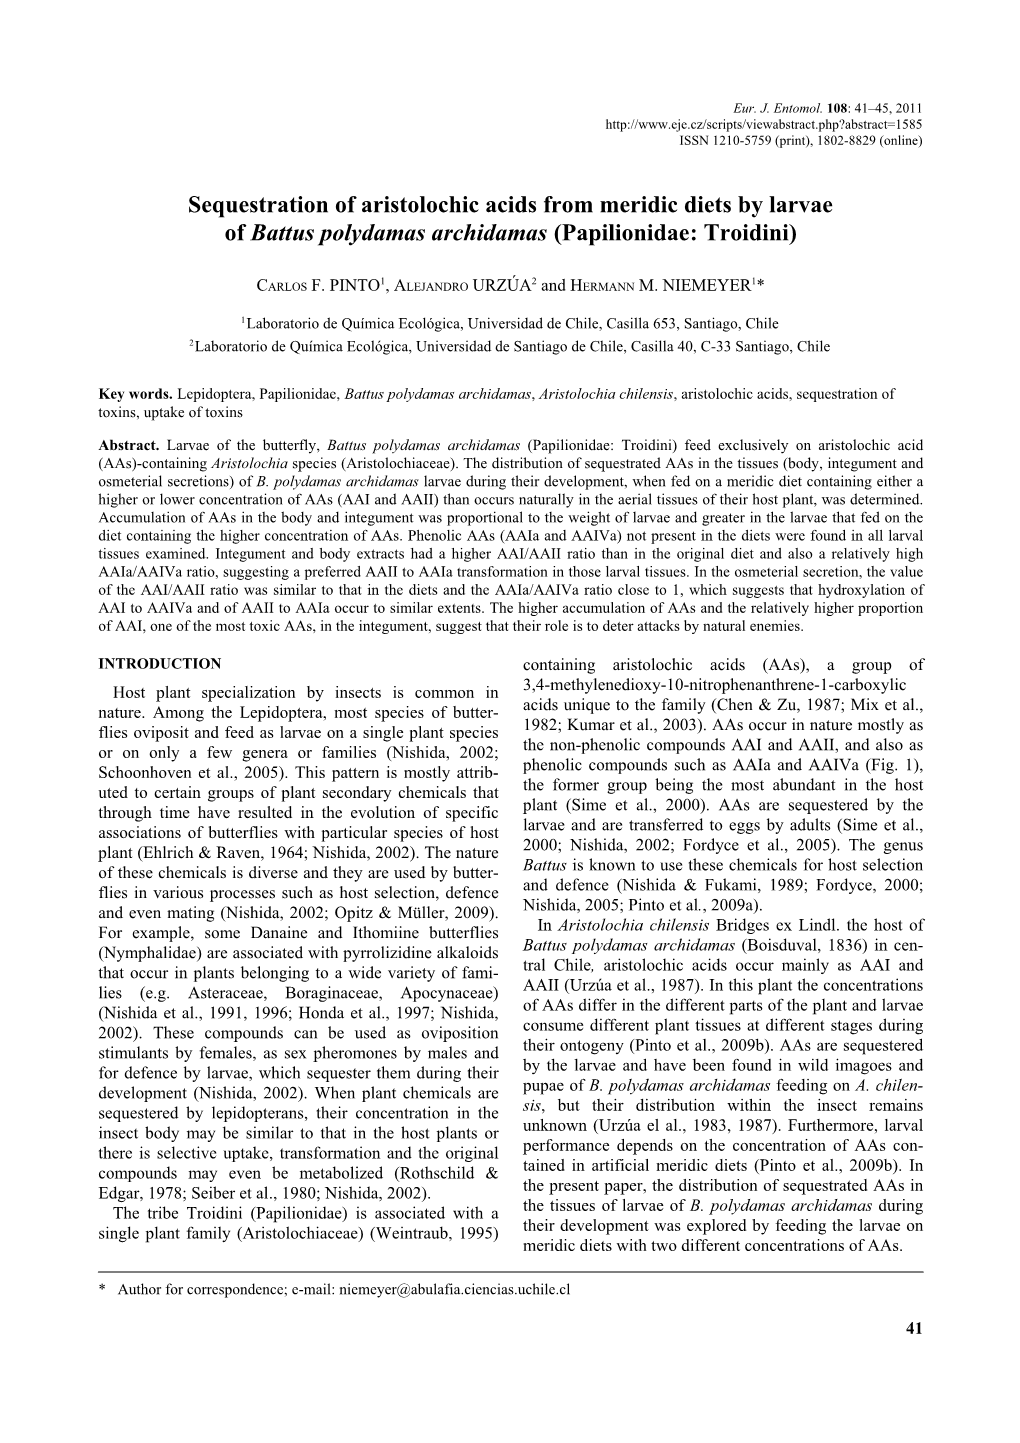 Sequestration of Aristolochic Acids from Meridic Diets by Larvae of Battus Polydamas Archidamas (Papilionidae: Troidini)